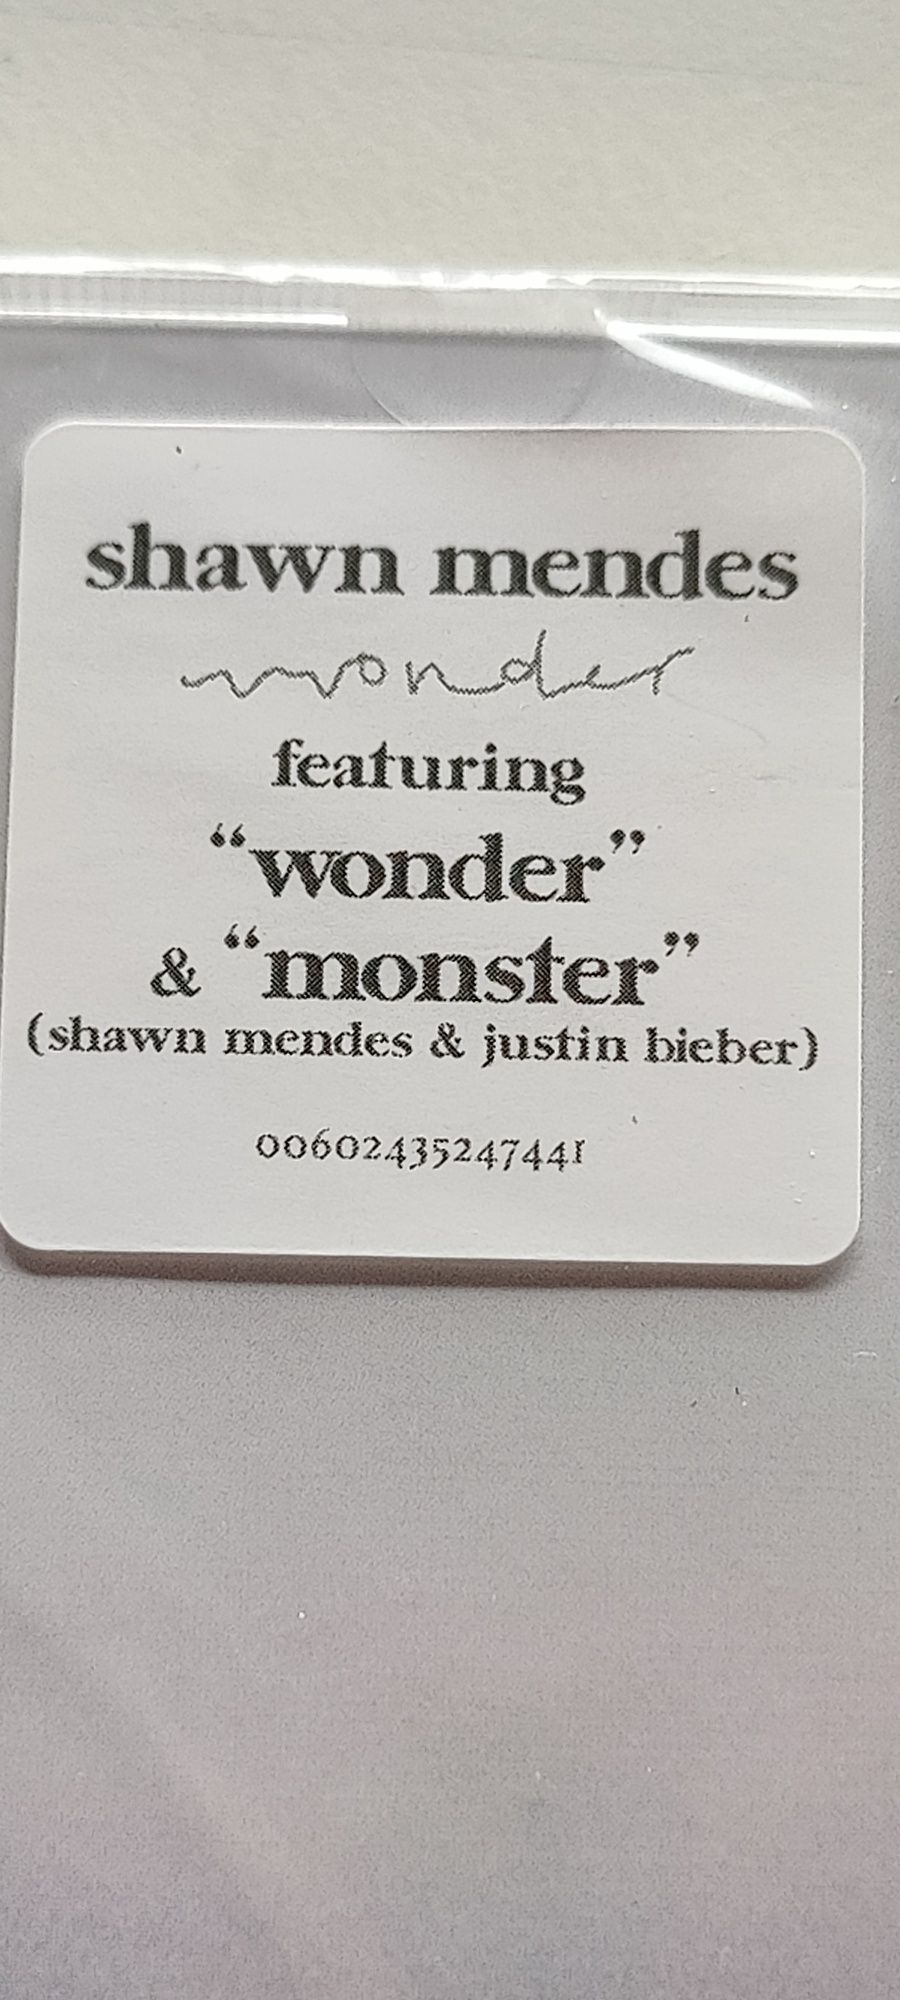 CD Shawn Mendes "Wonder" & "Monster" (Shawn & Justin Bieber)